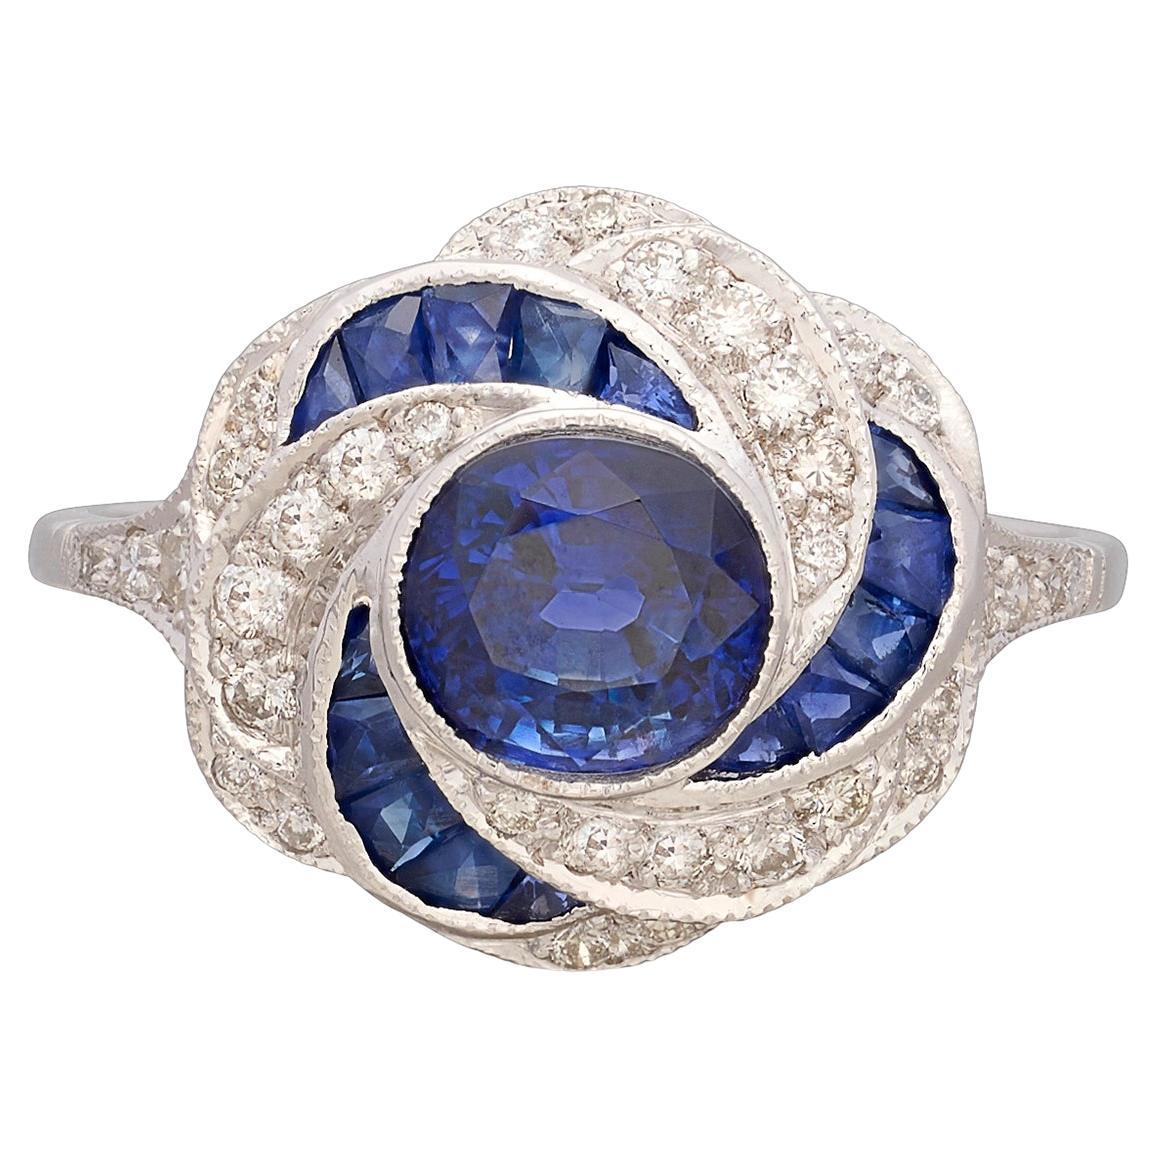 Unique Art Deco Inspired Sapphire & Diamond 18k Ring For Sale